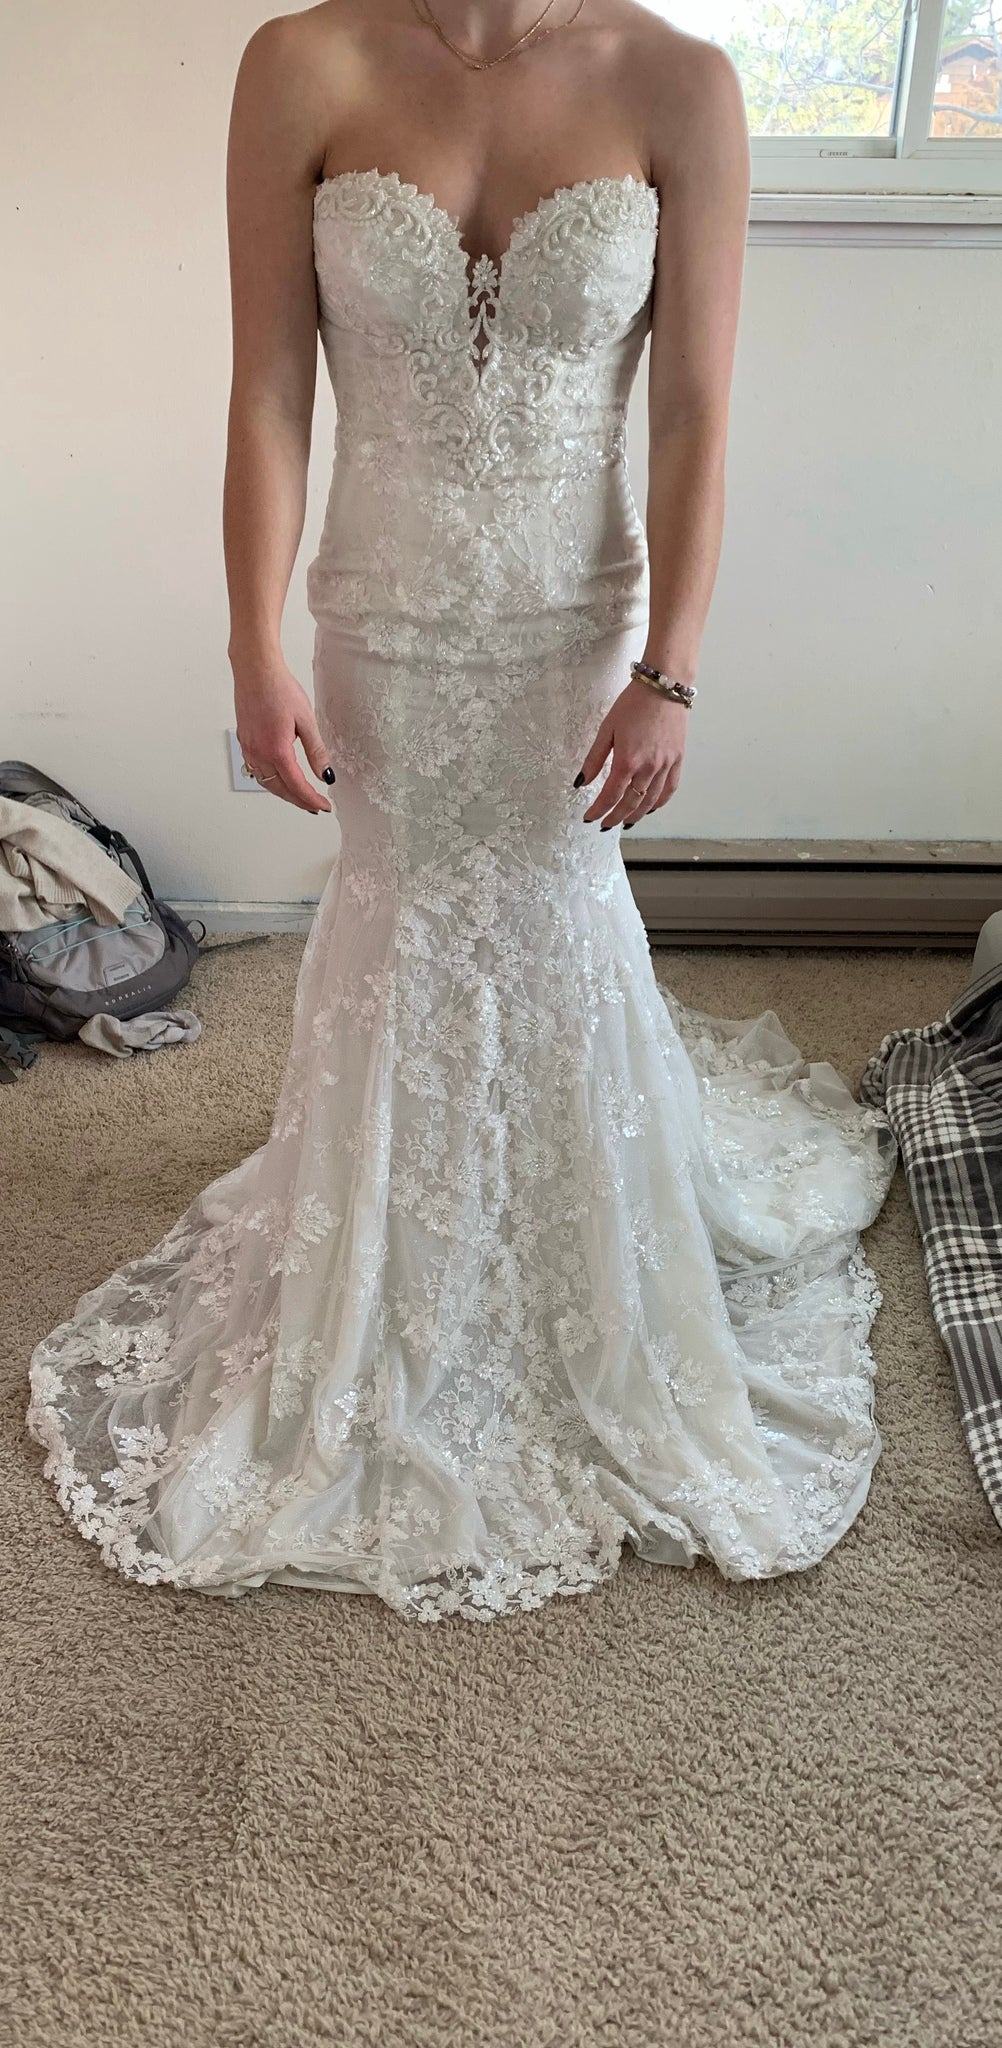 Galia lahav 'Guerlain' wedding dress size-00 SAMPLE